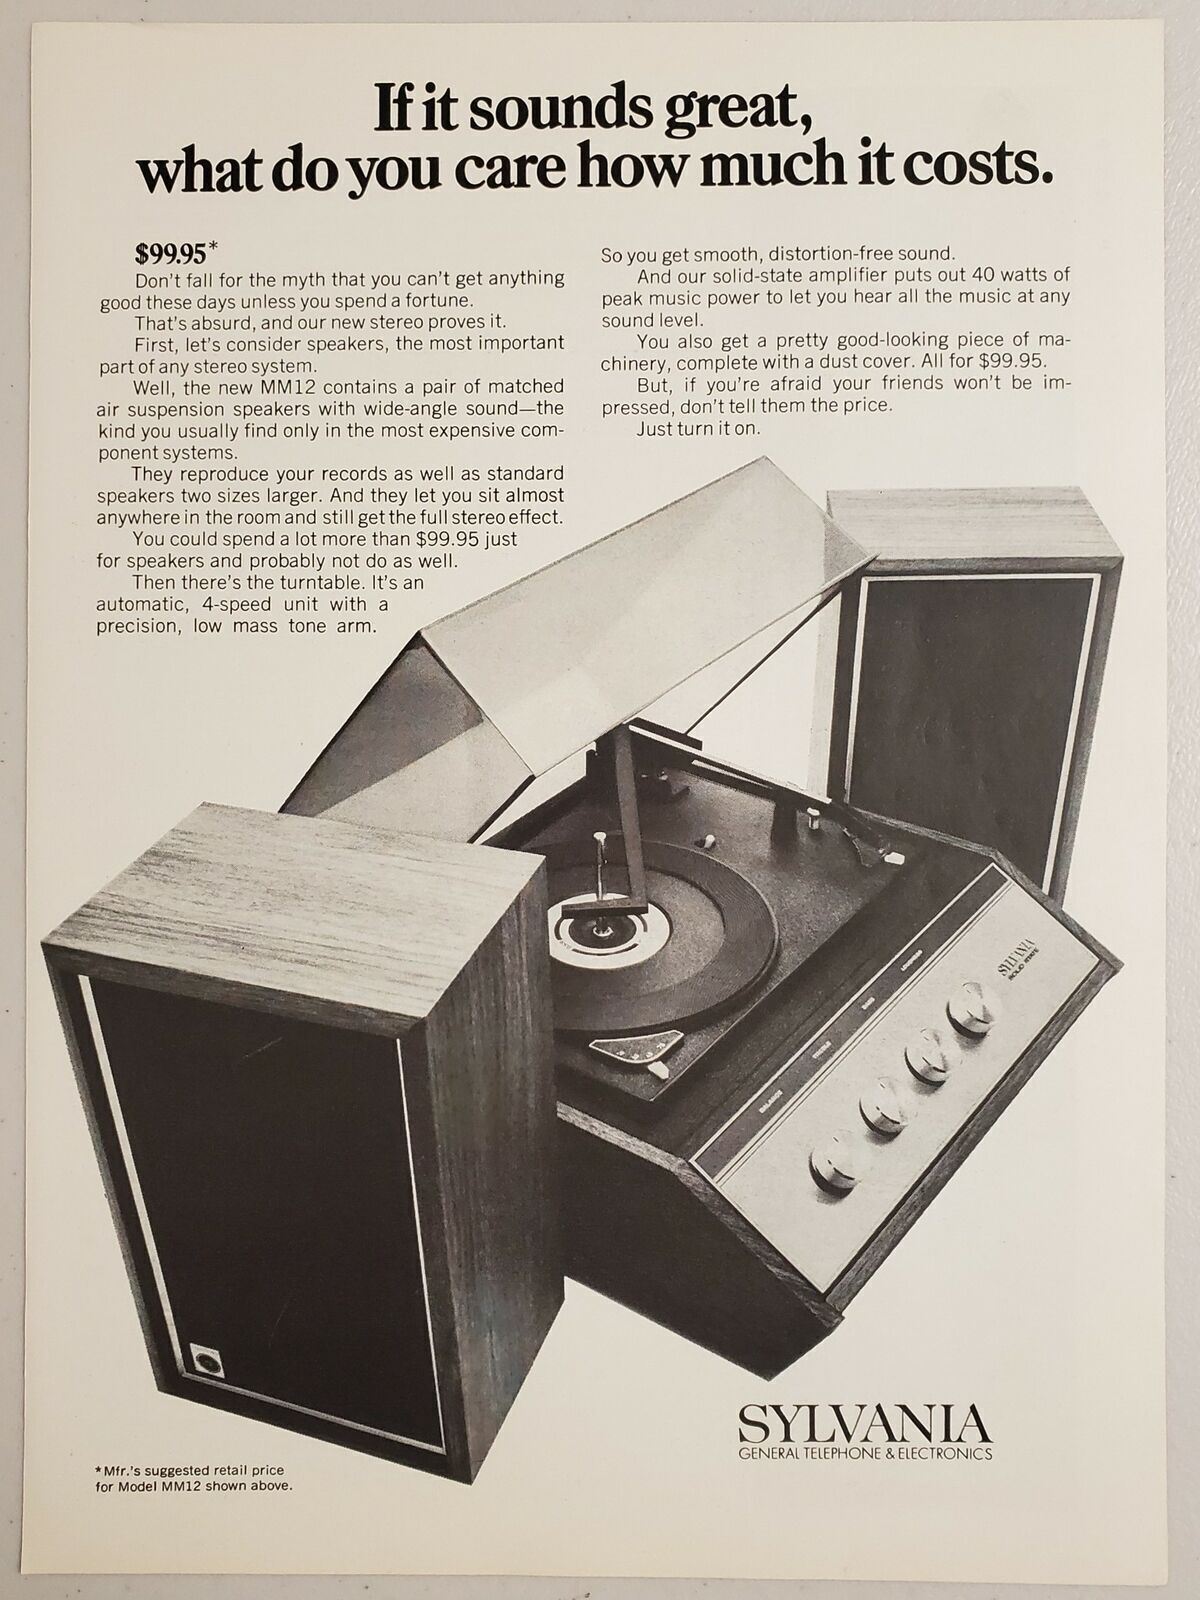 1970 Print Ad Sylvania MM12 Record Player & Air Suspension Speakers $99.95